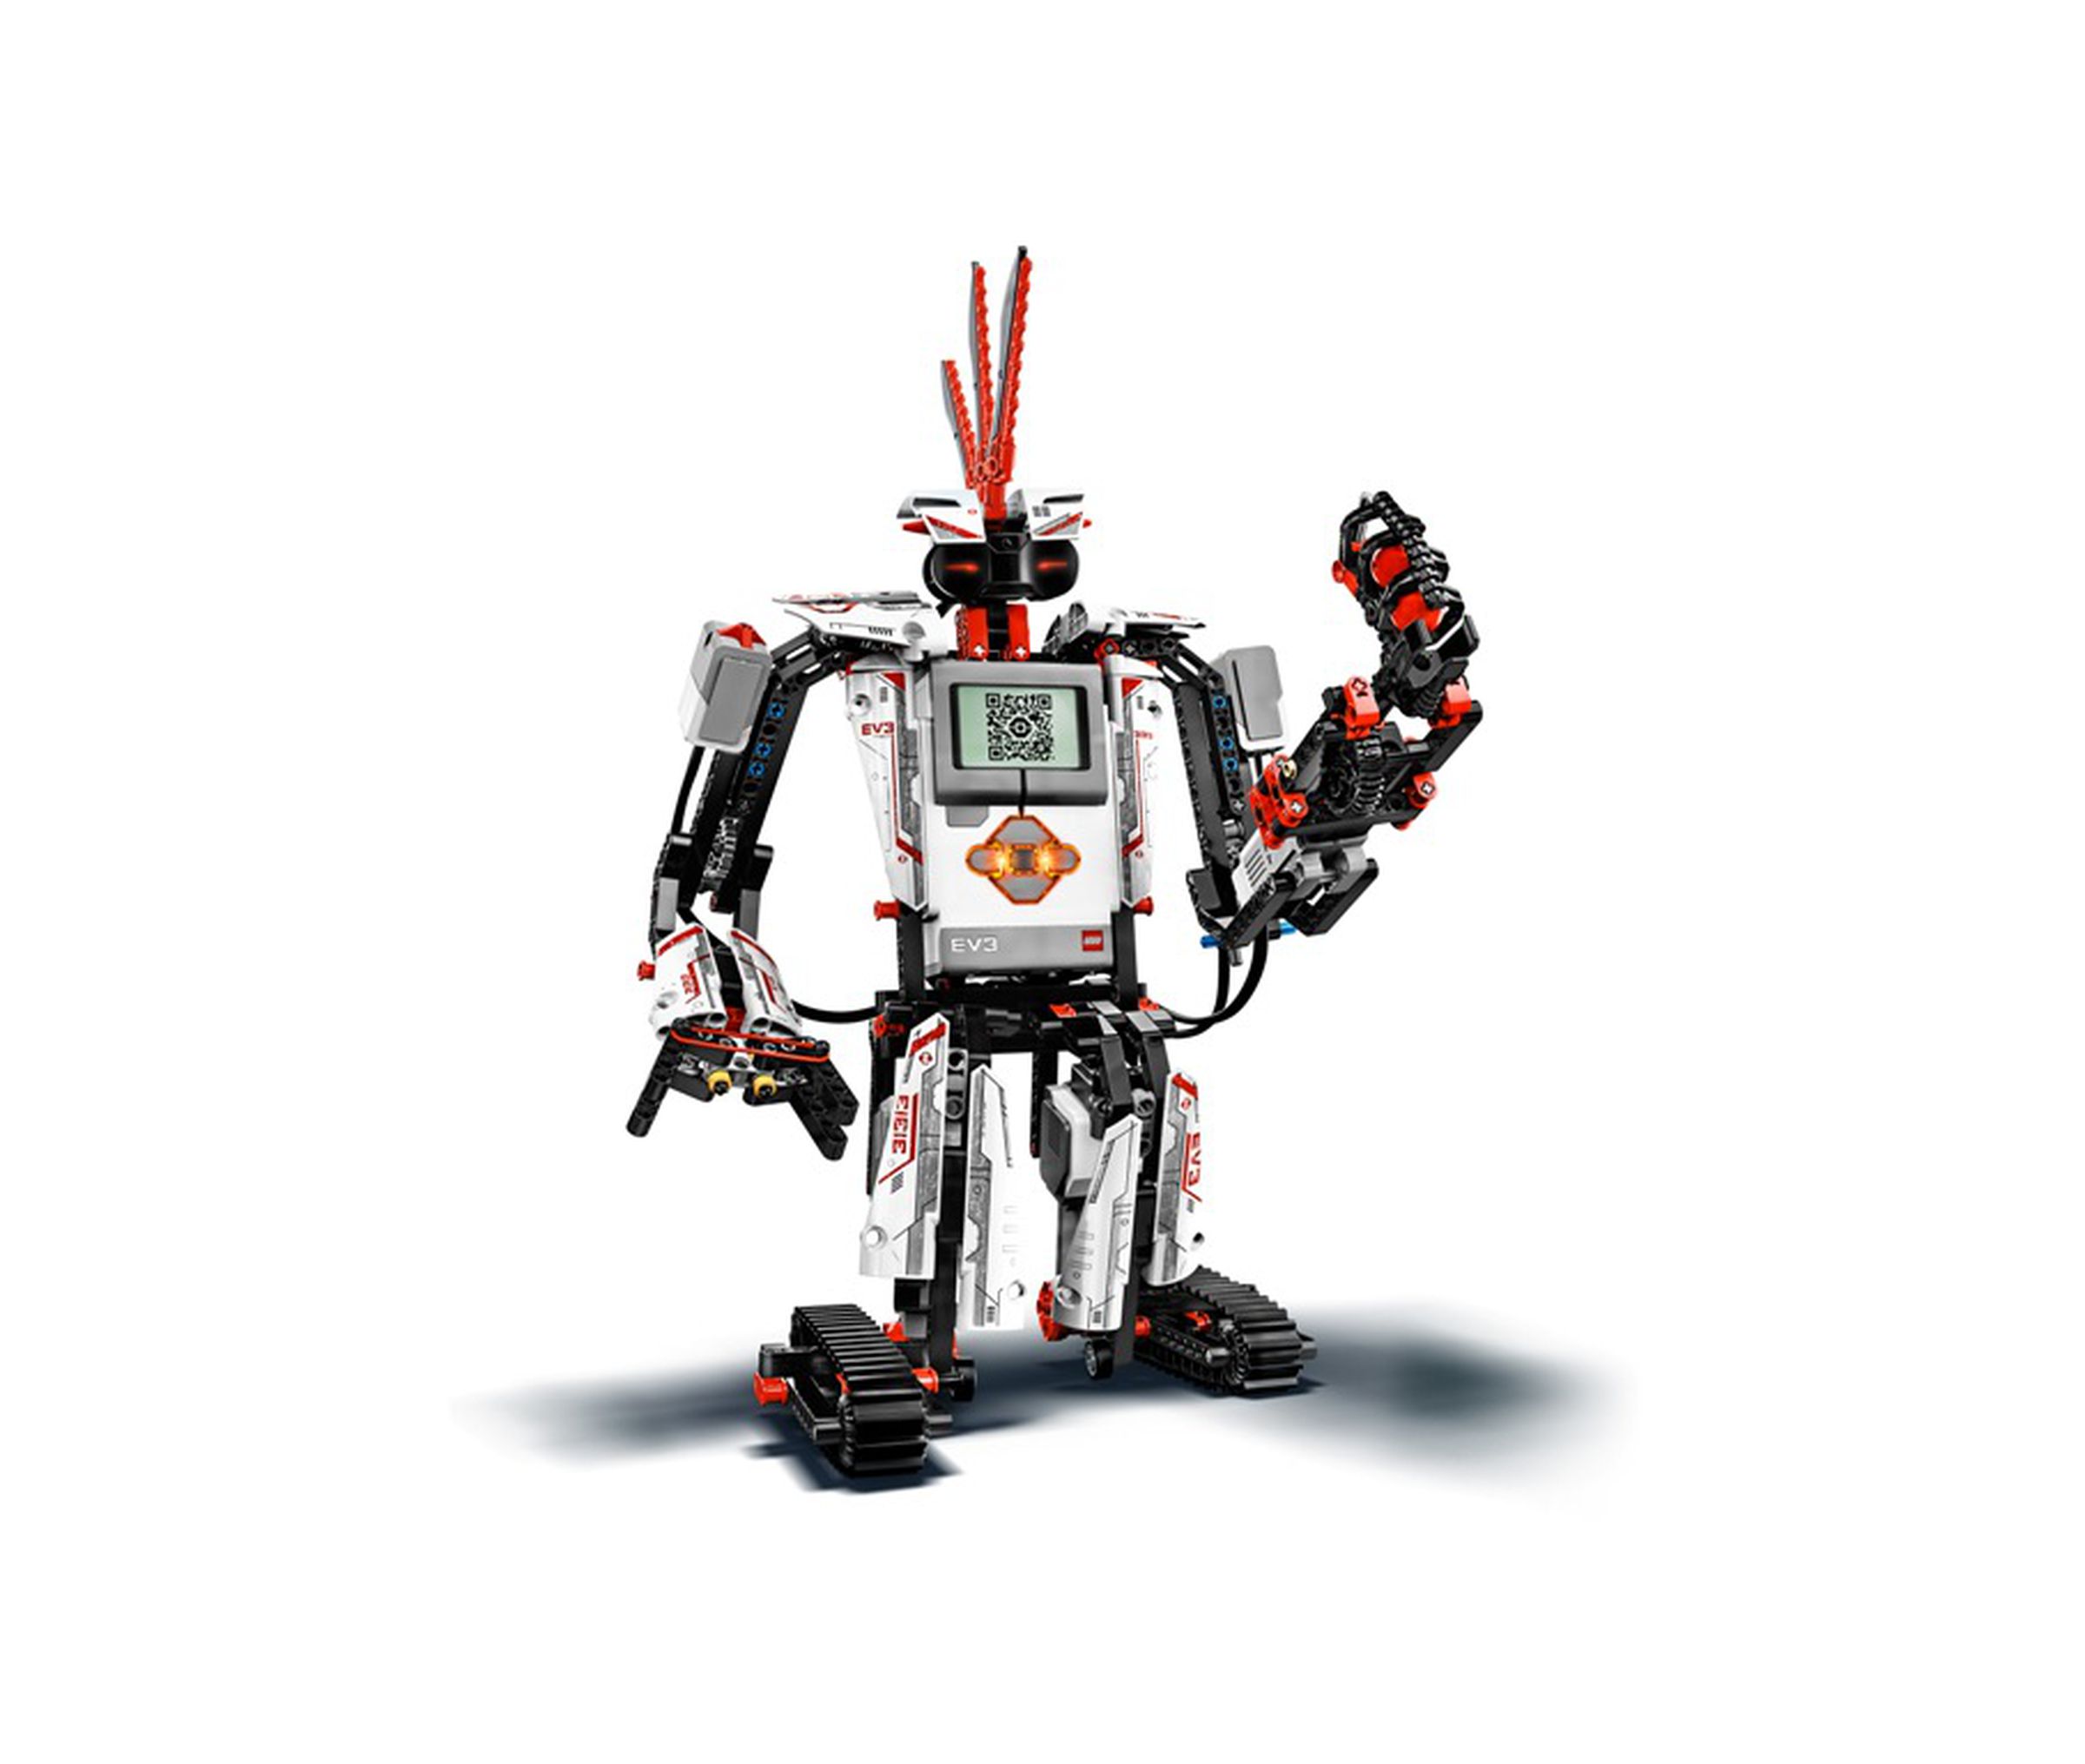 Lego Mindstorms EV3 photos